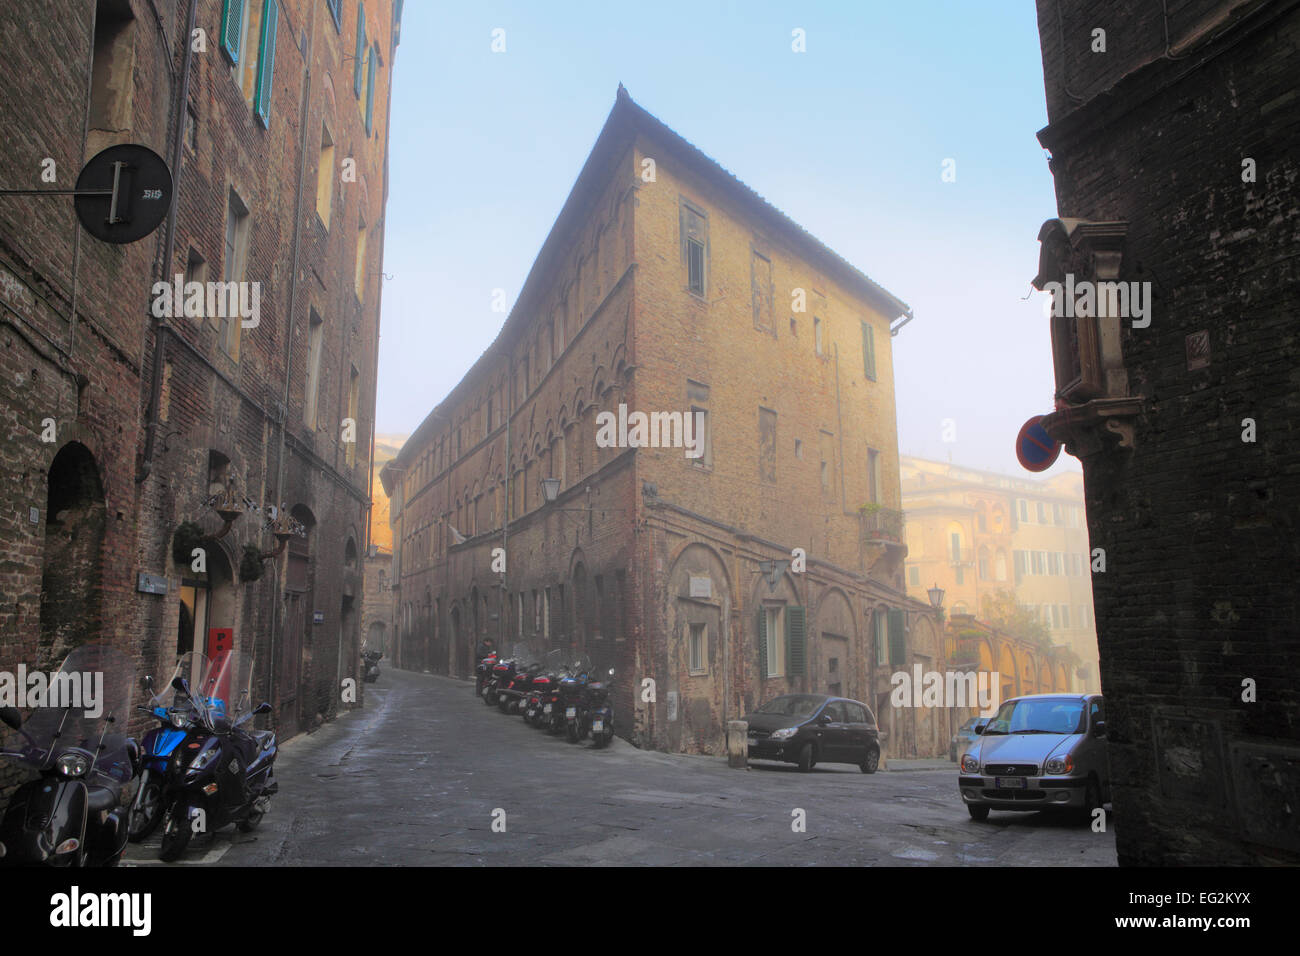 Via medievale nella nebbia, Siena, Toscana, Italia Foto Stock